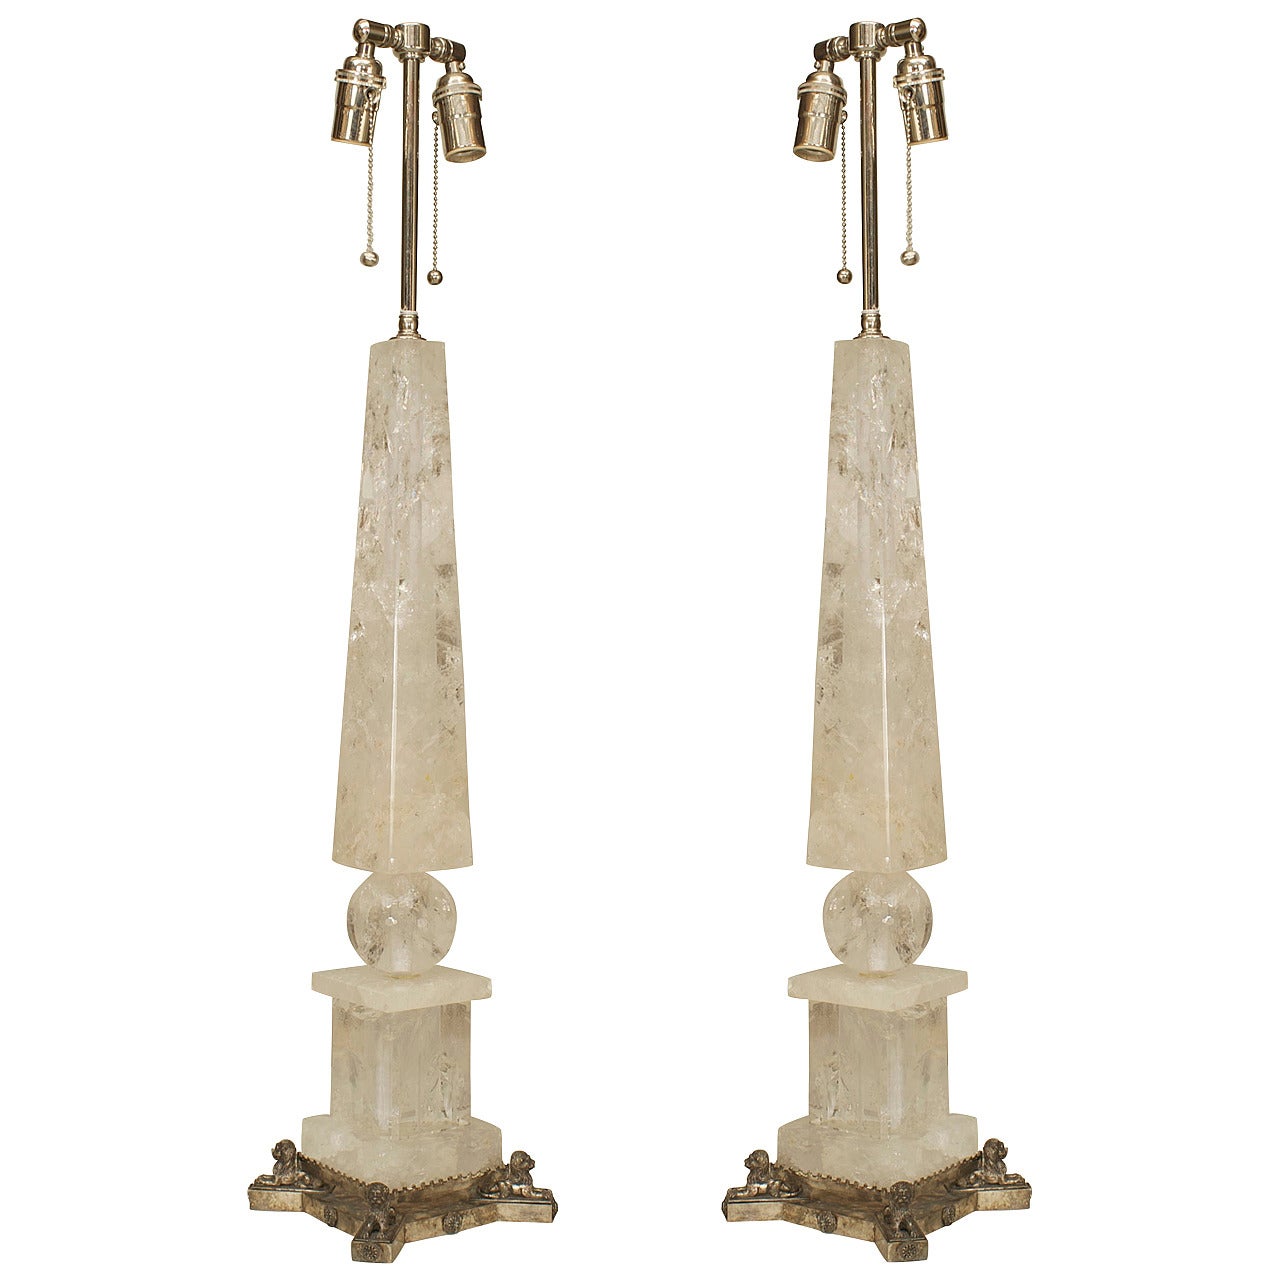 Pair of Baltic Neoclassic Rock Crystal Obelisk Table Lamps